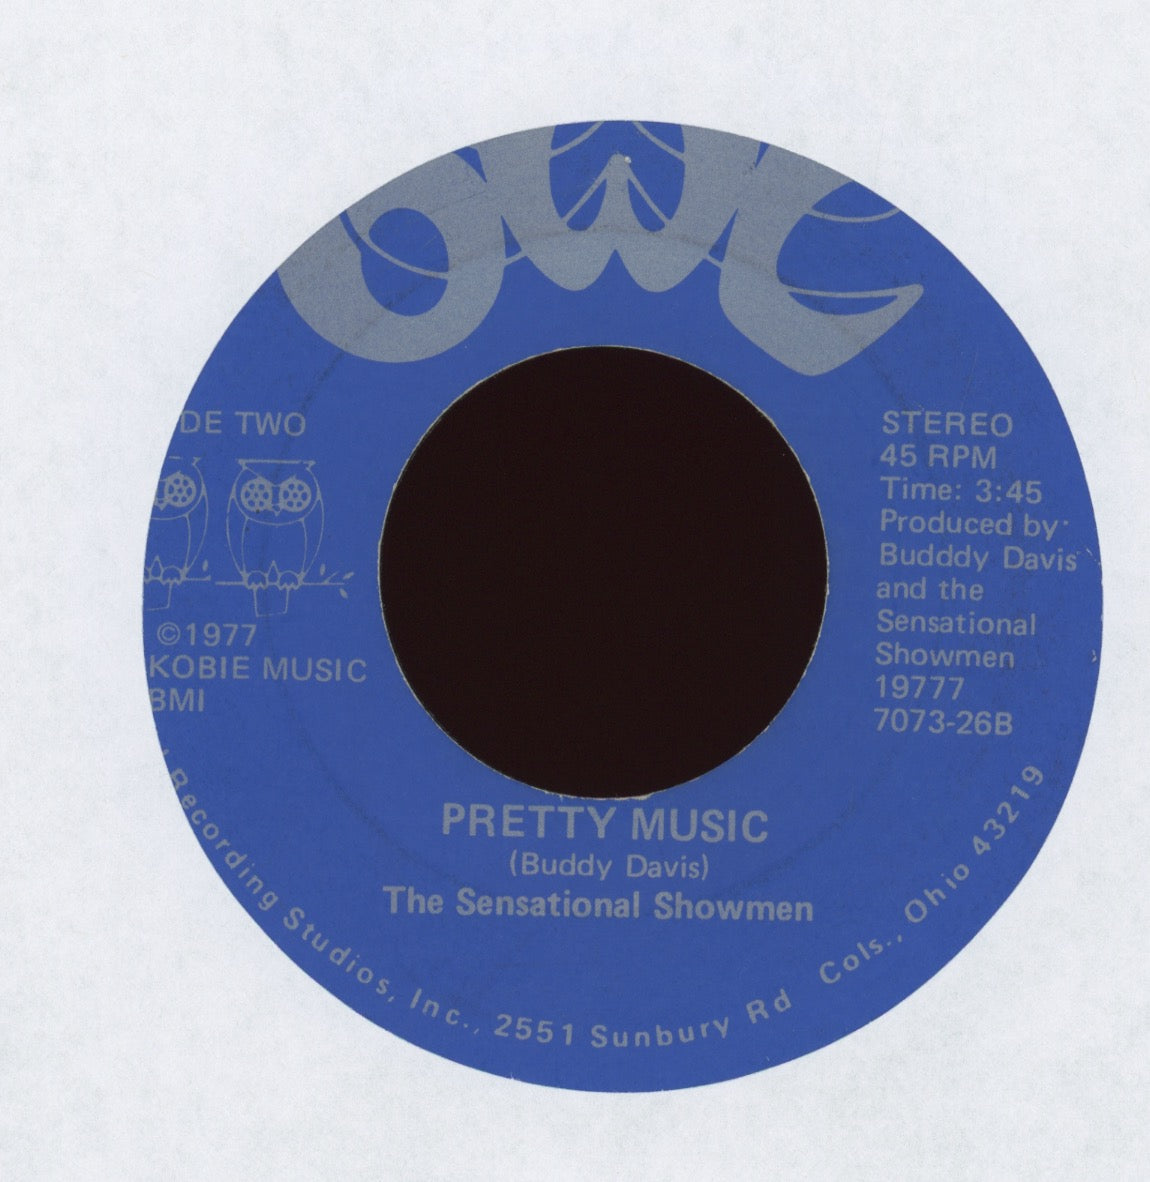 The Sensational Showmen - Bomp on Owl 70's Soul Funk 45